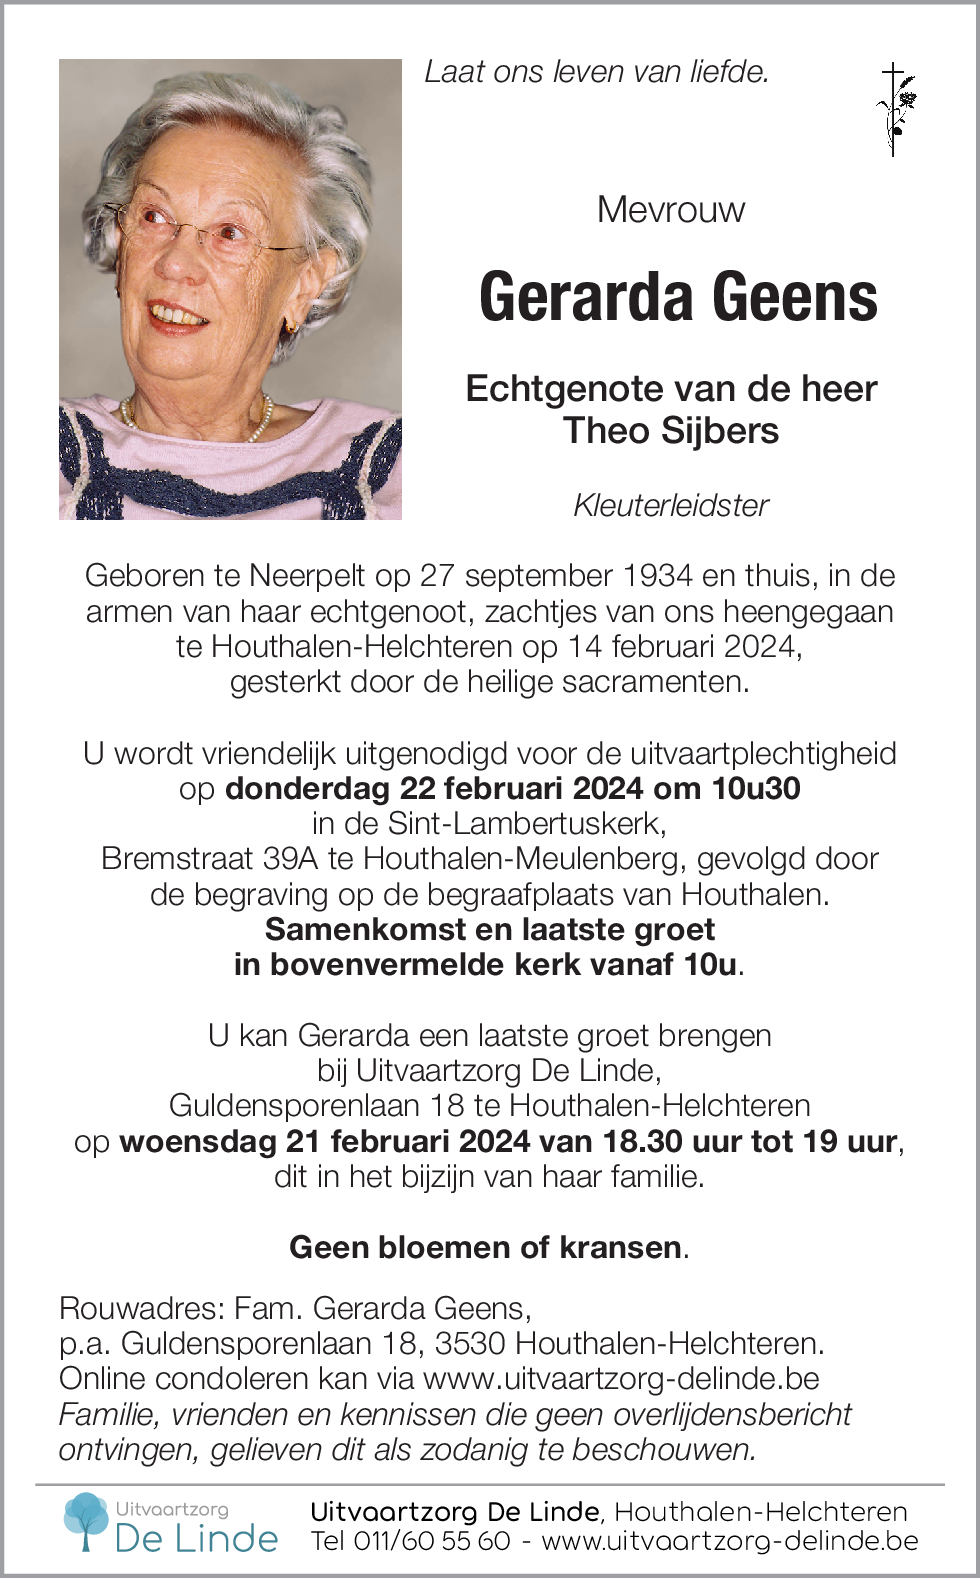 Gerarda Geens